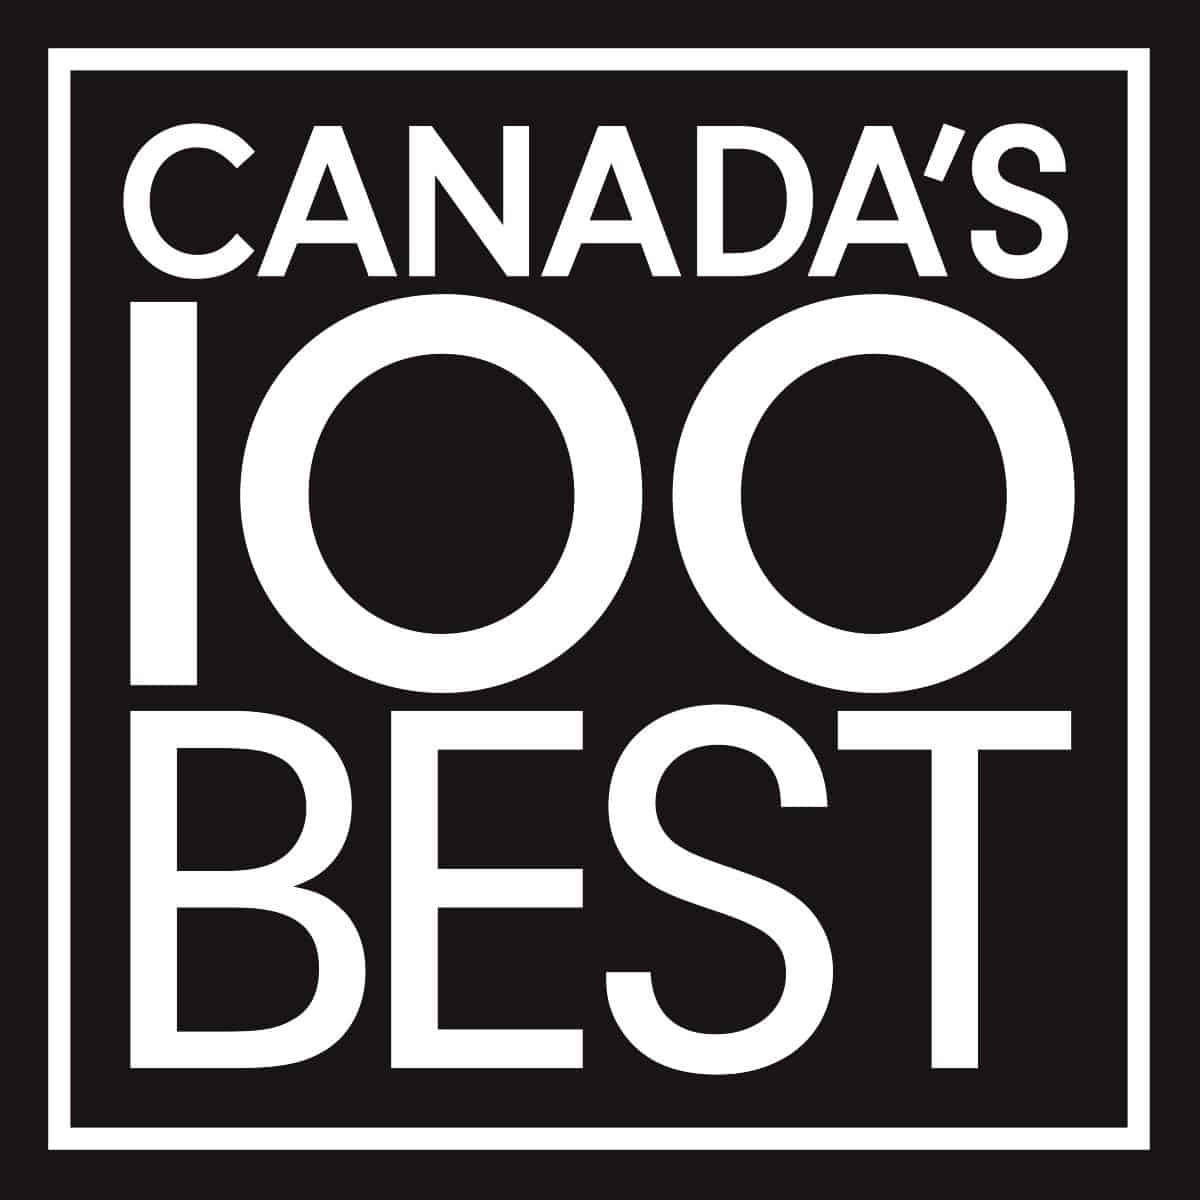 Canada's 100 Best Restaurants 2019 - Canada's 100 Best Restaurants, Bars  and Chefs.